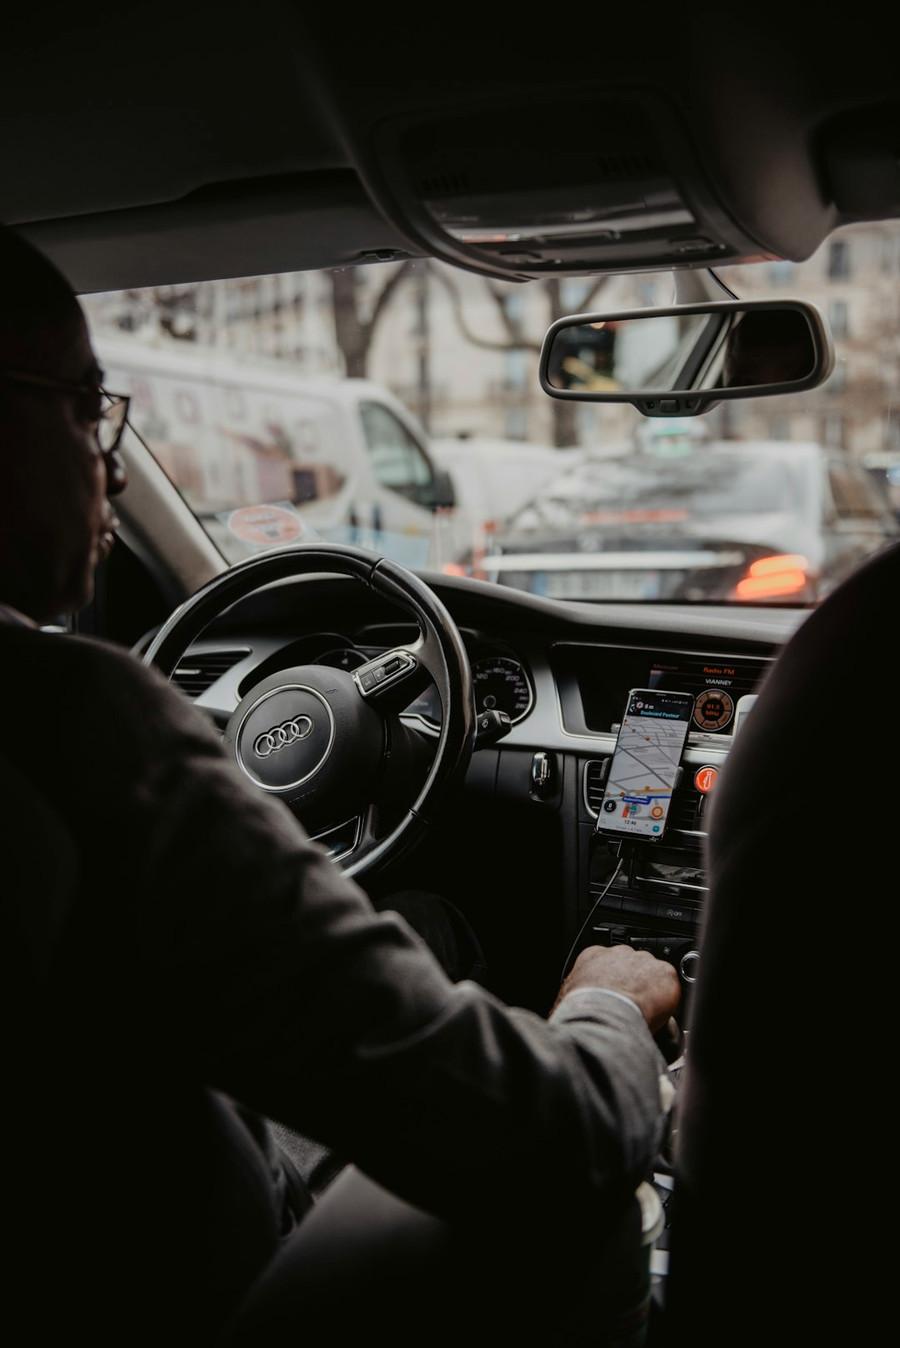 Taking The Uber Ride